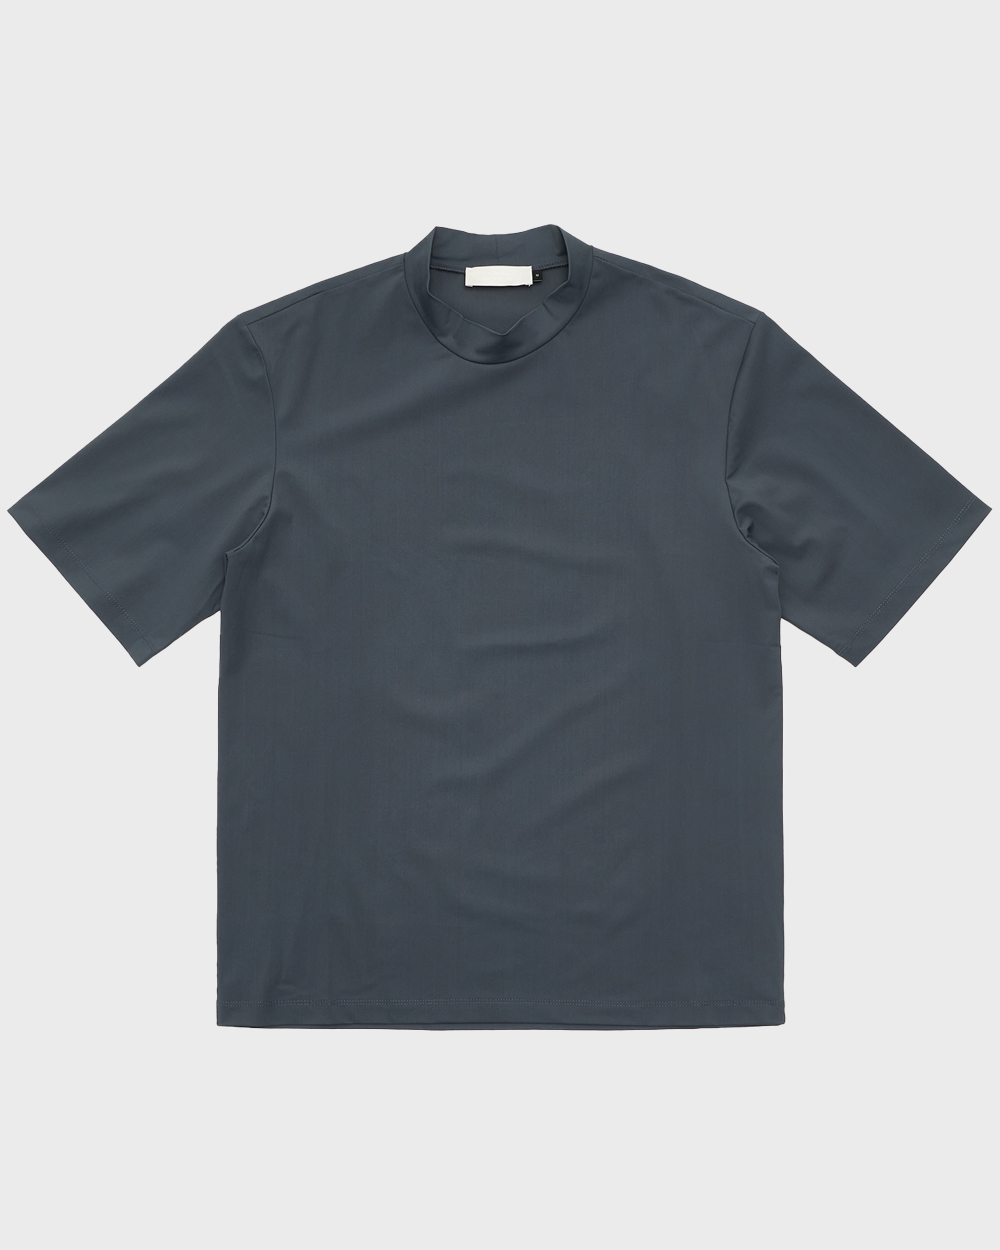 Mock Neck T-Shirt (Charcoal)